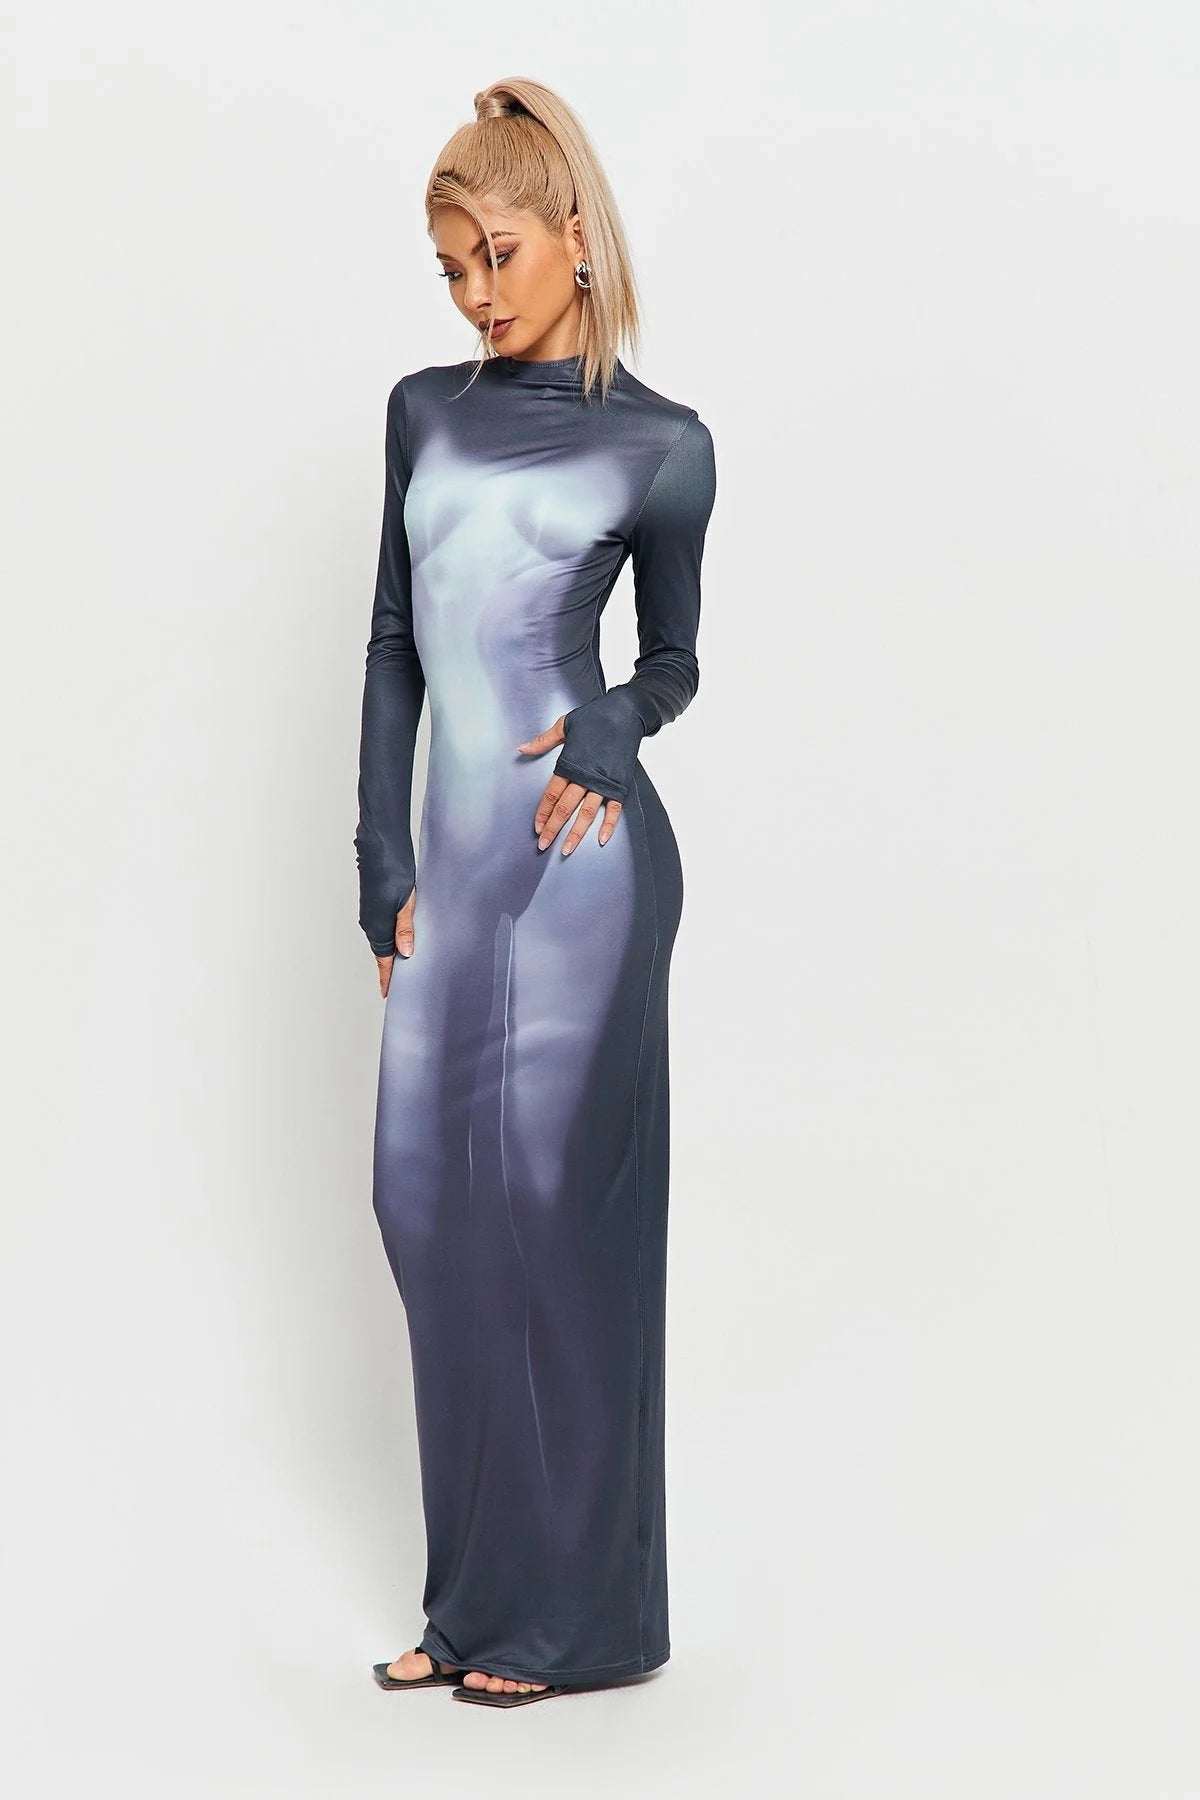 3D Body Printing Super Long Sleeve Body Robe Party Dress aclosy